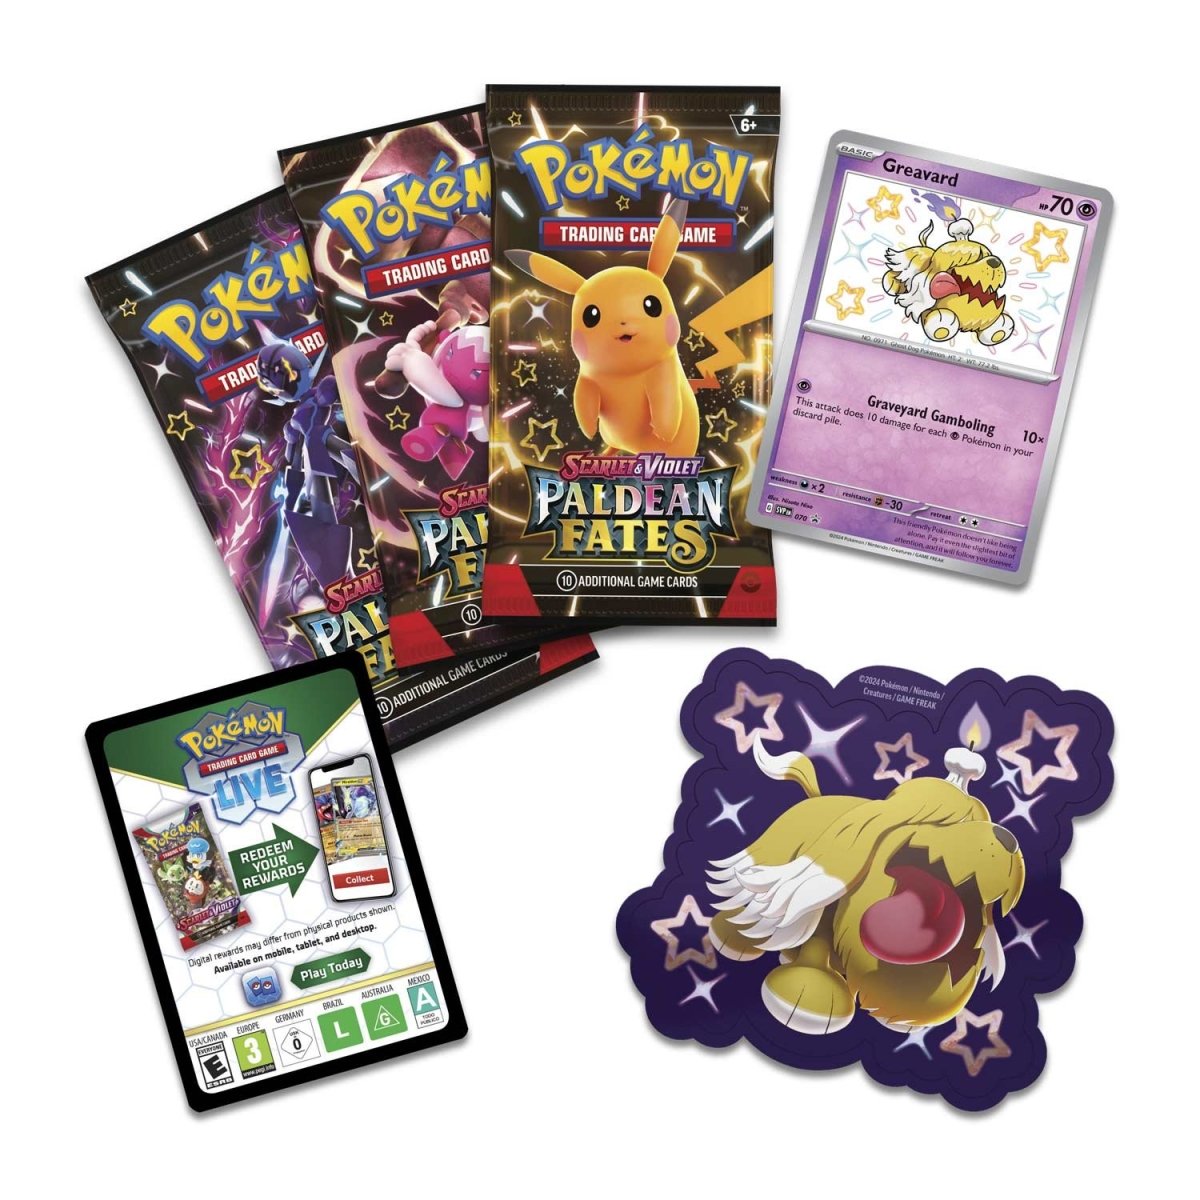 Pokémon: The Official Sticker Book of the Paldea Region